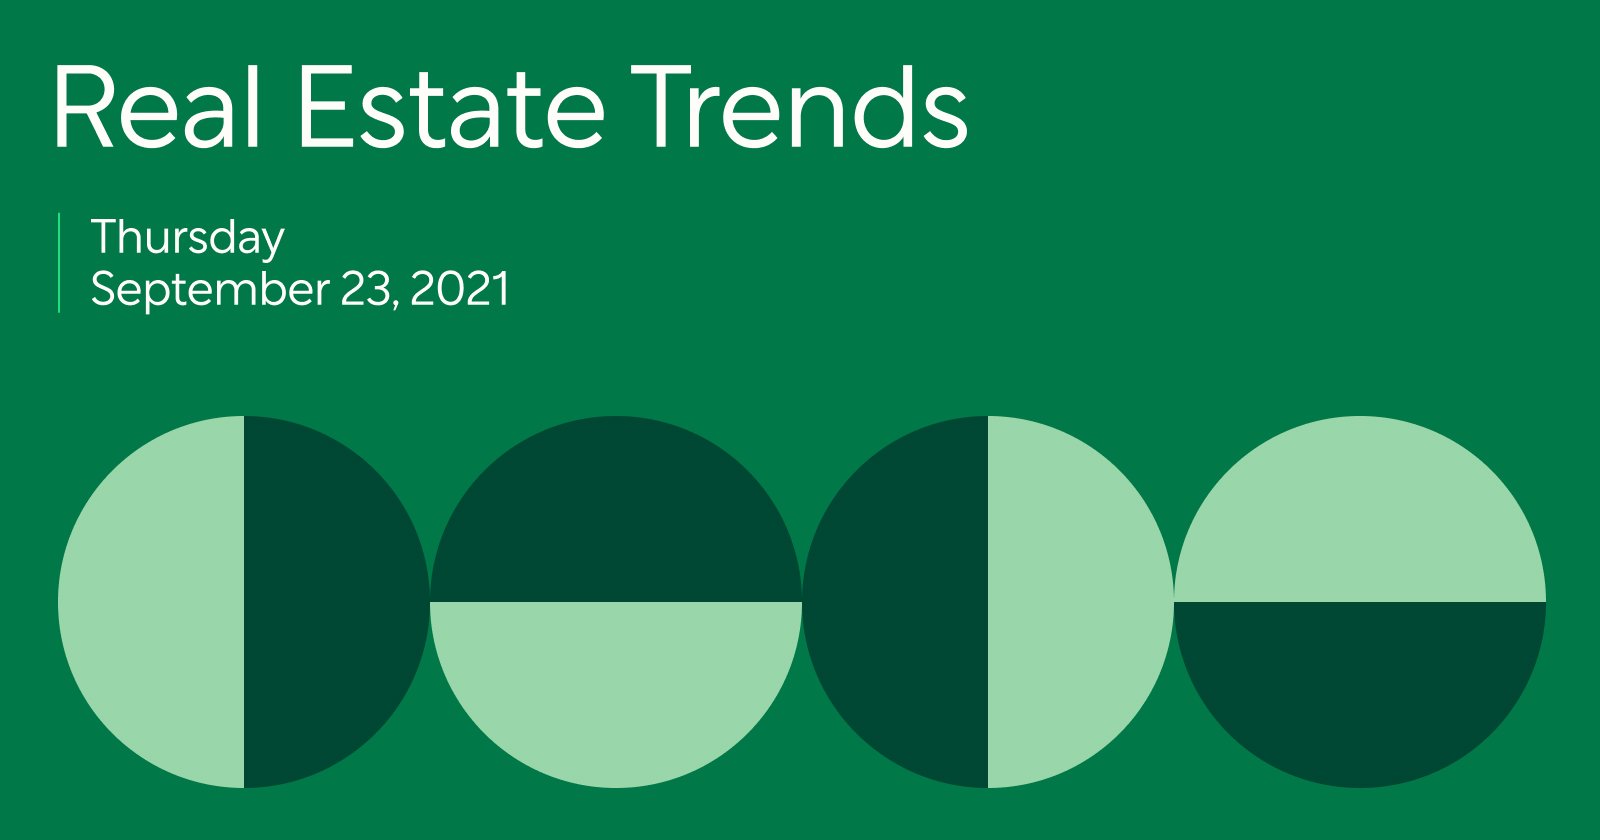 Real Estate Trends from Better Week of September 23, 2021